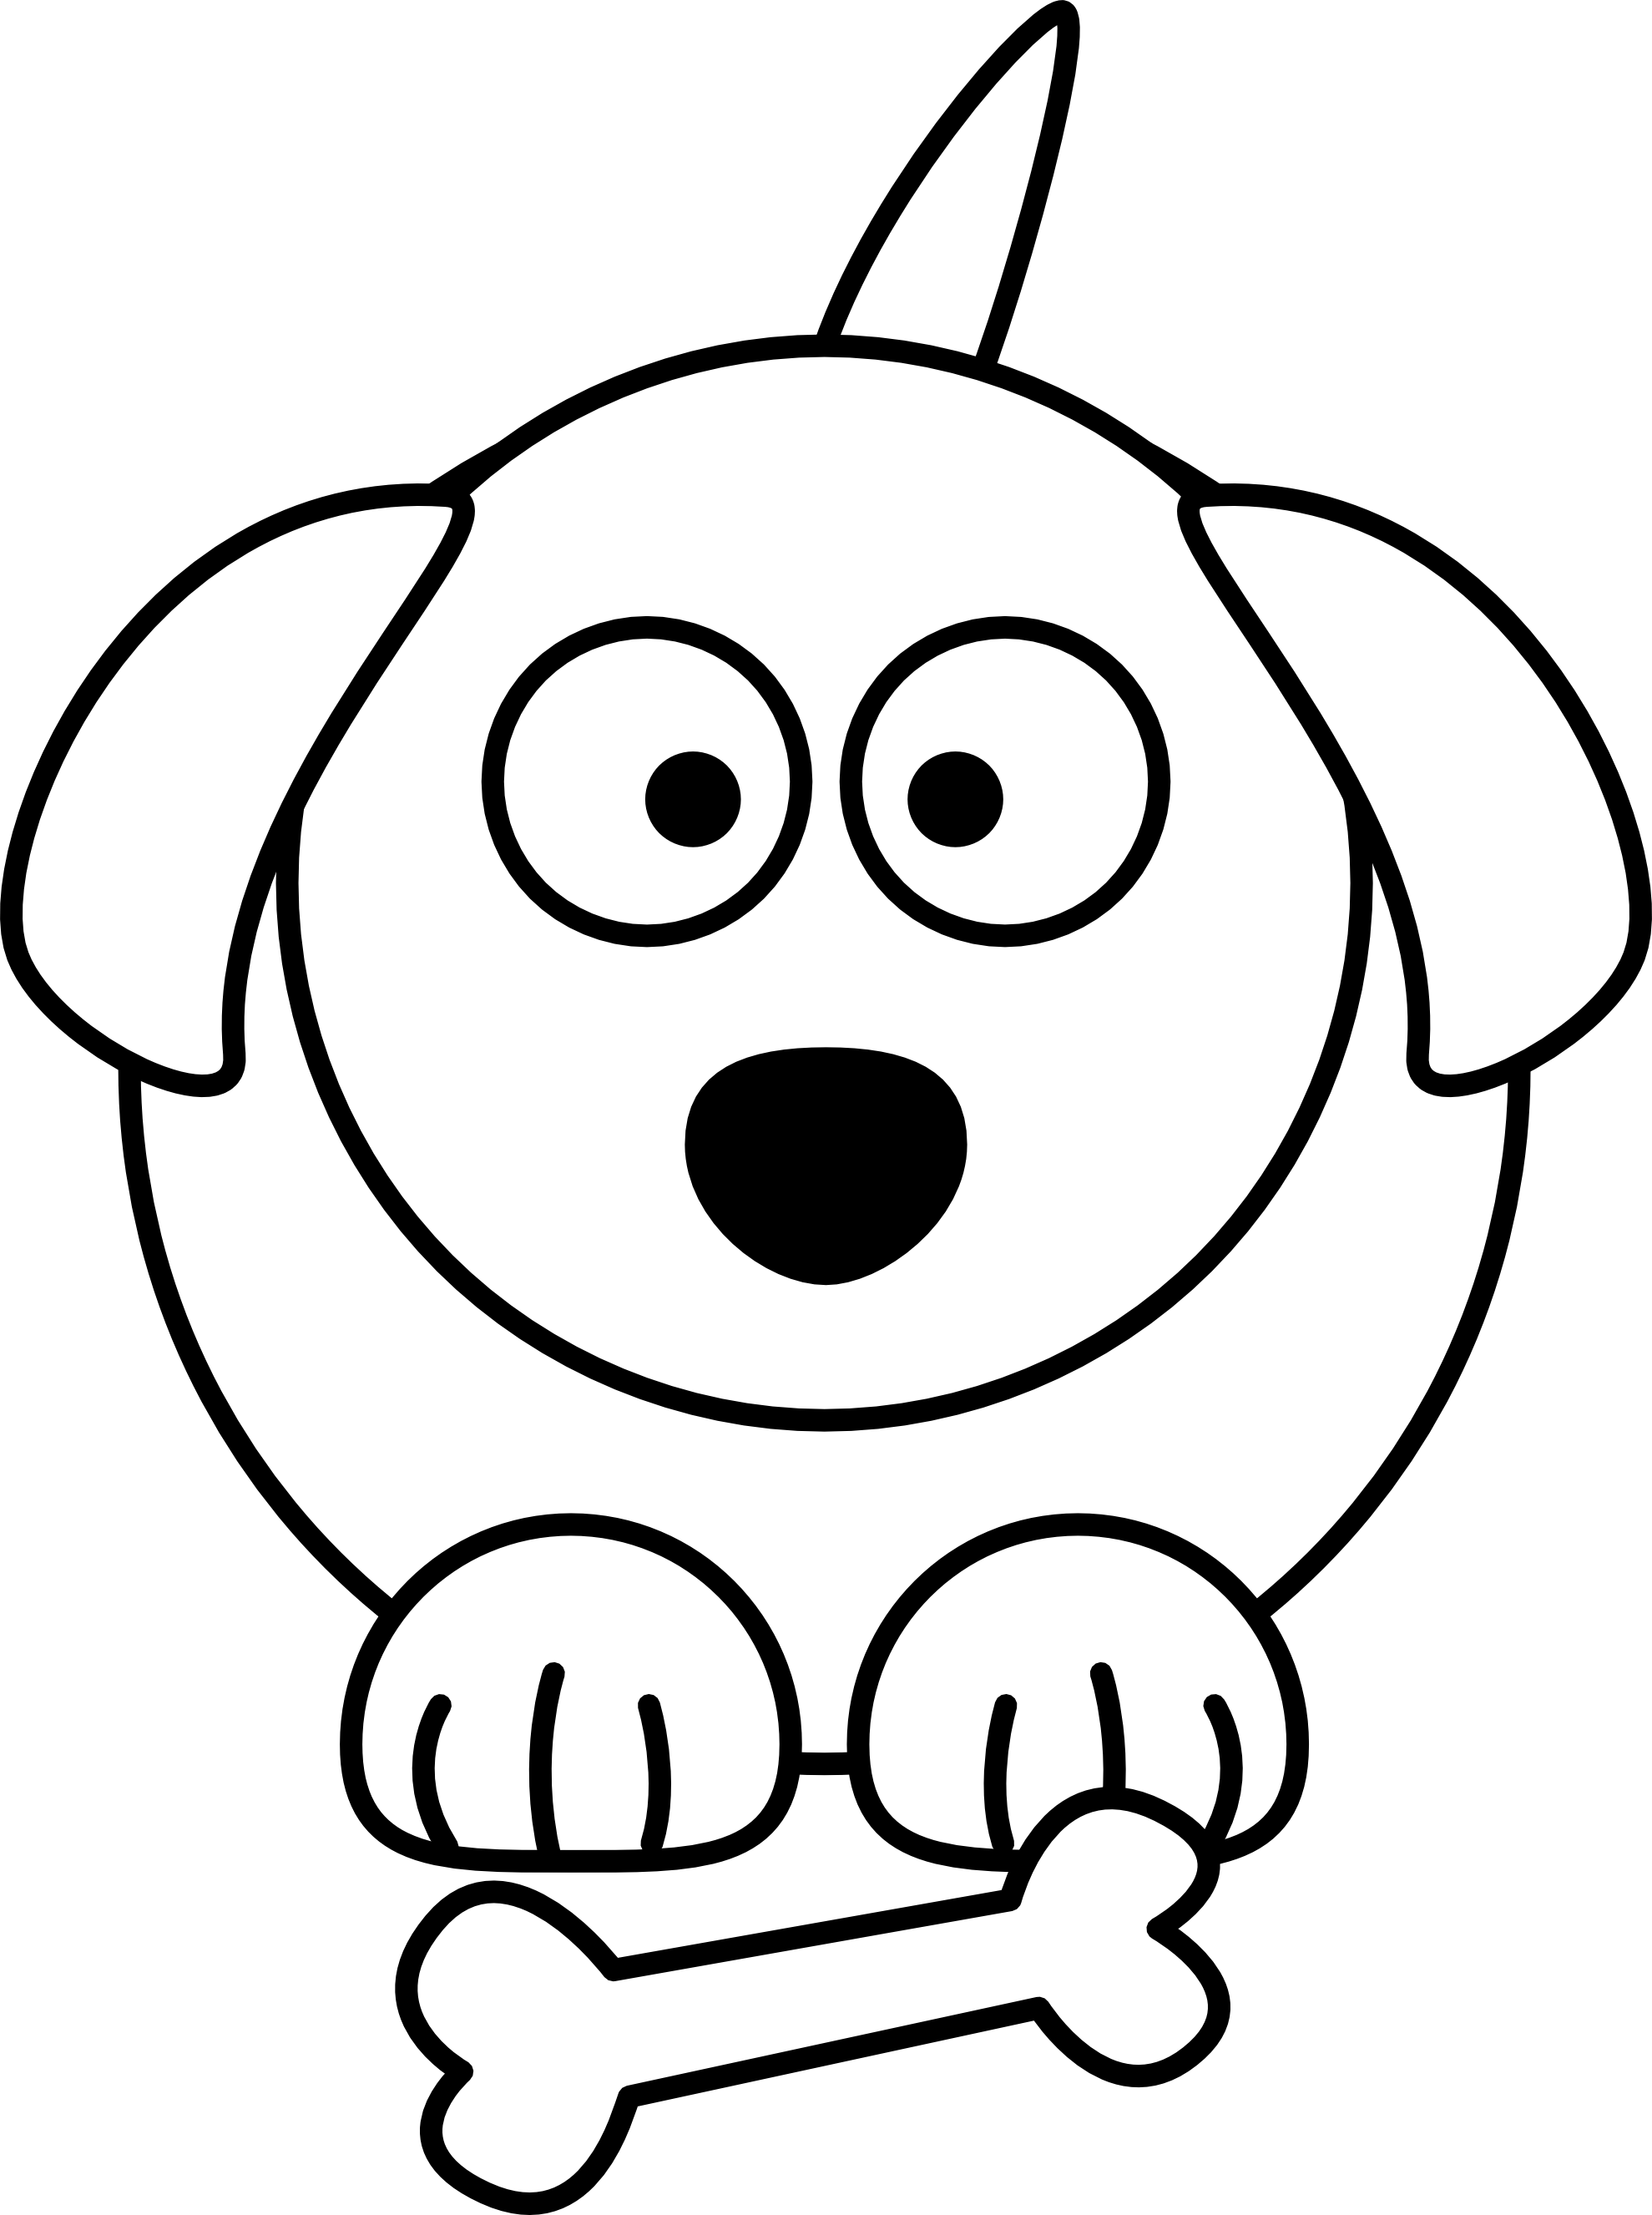 Dog black and white black and white dog cartoon free